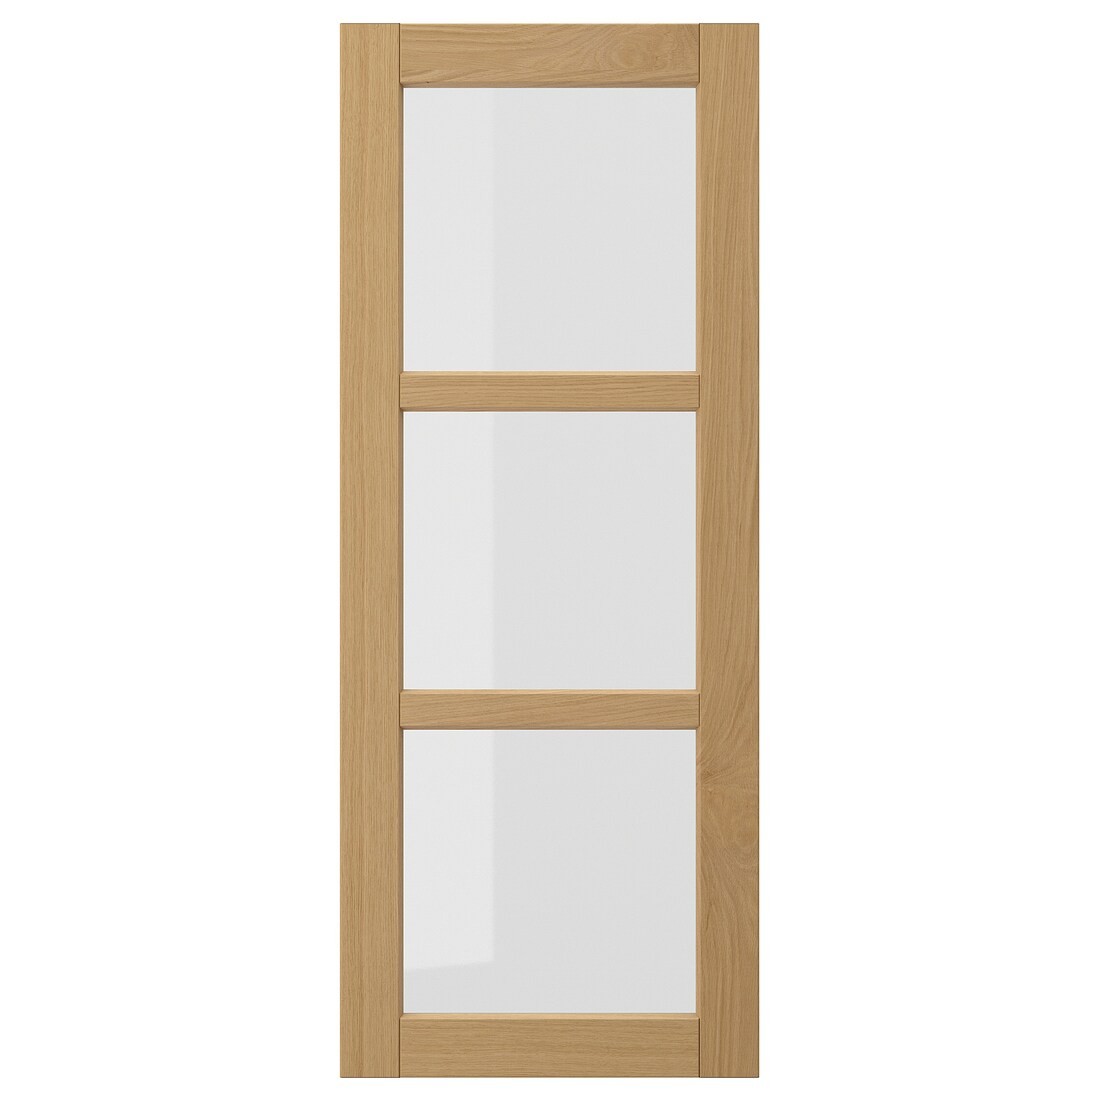 IKEA FORSBACKA Стеклянная дверь, дуб, 40x100 см 50565256 | 505.652.56